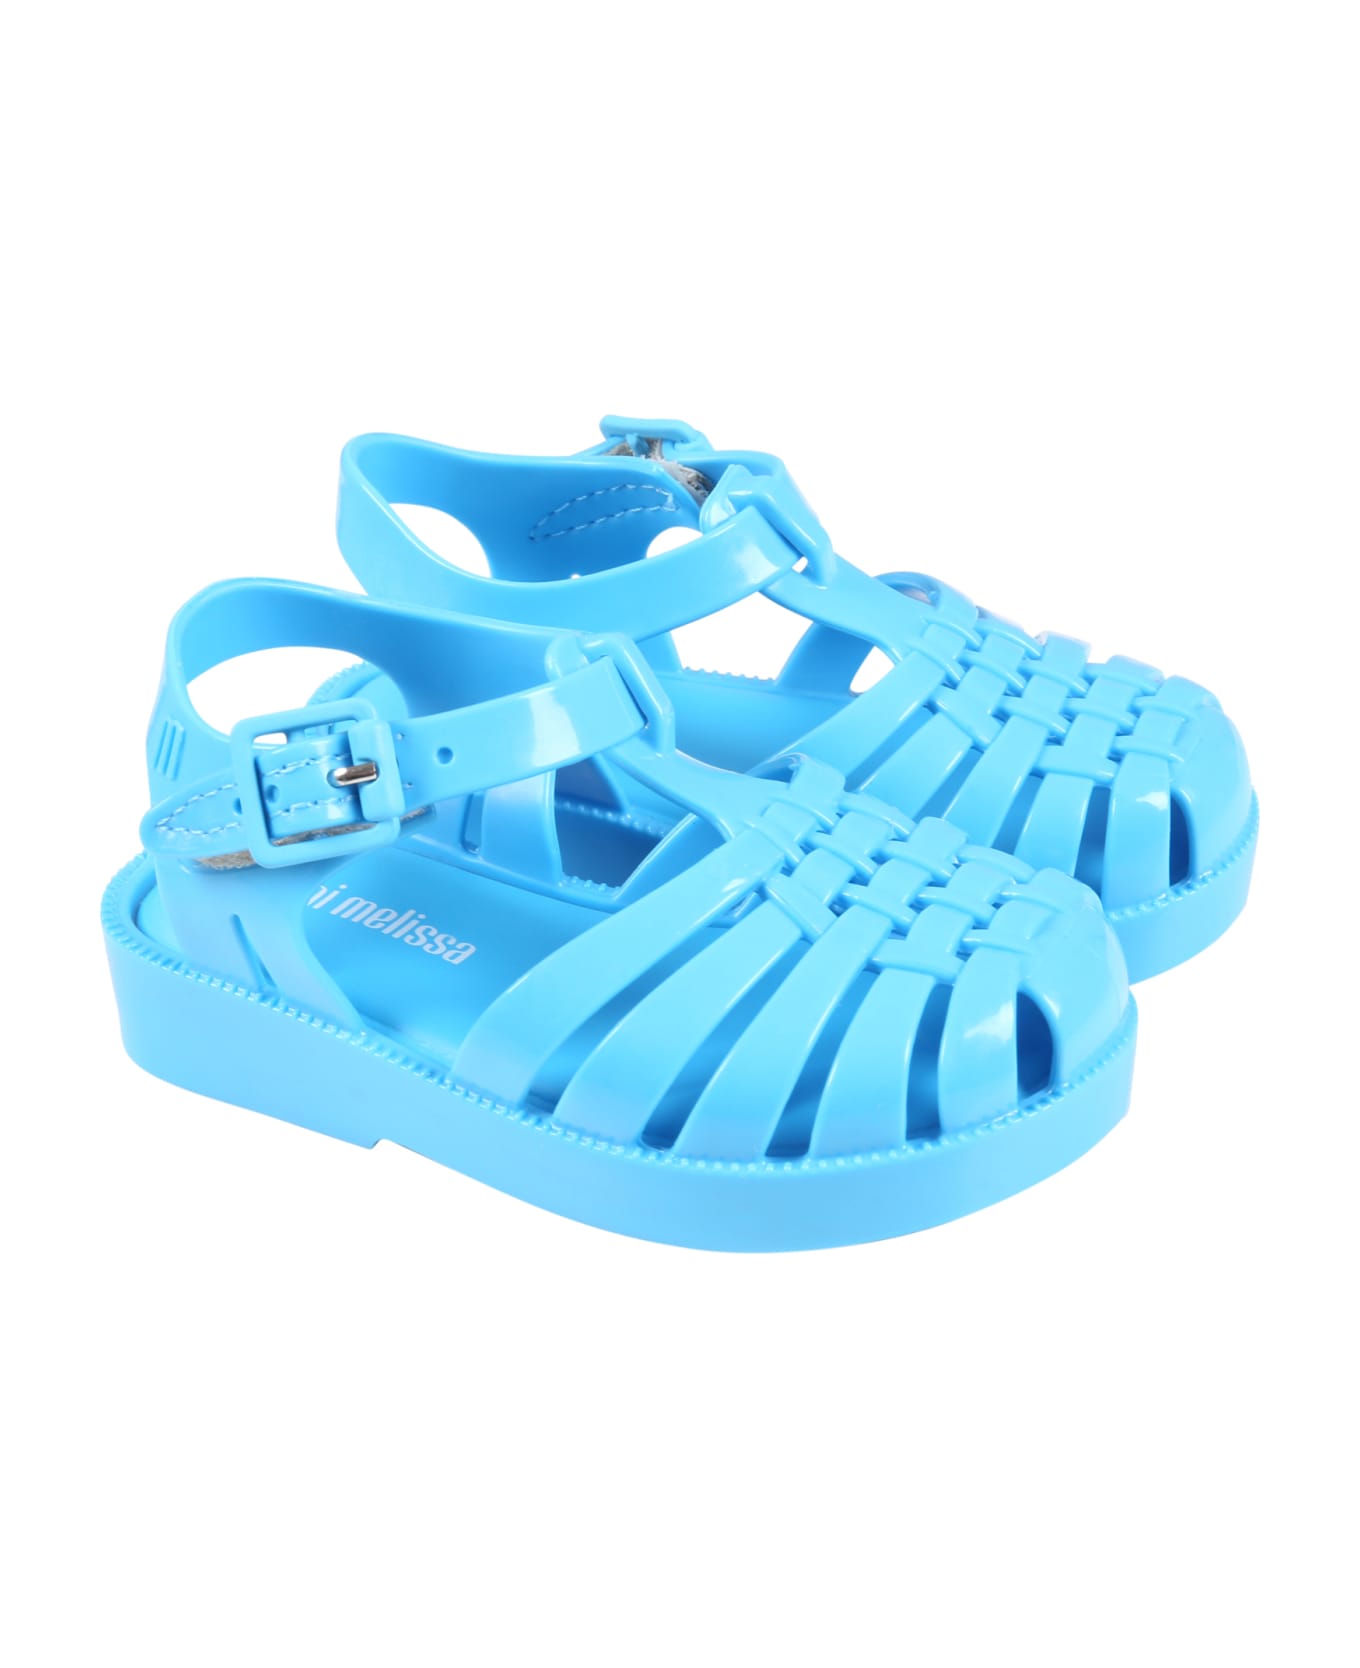 Melissa Azure Sandals For Kids - Light Blue